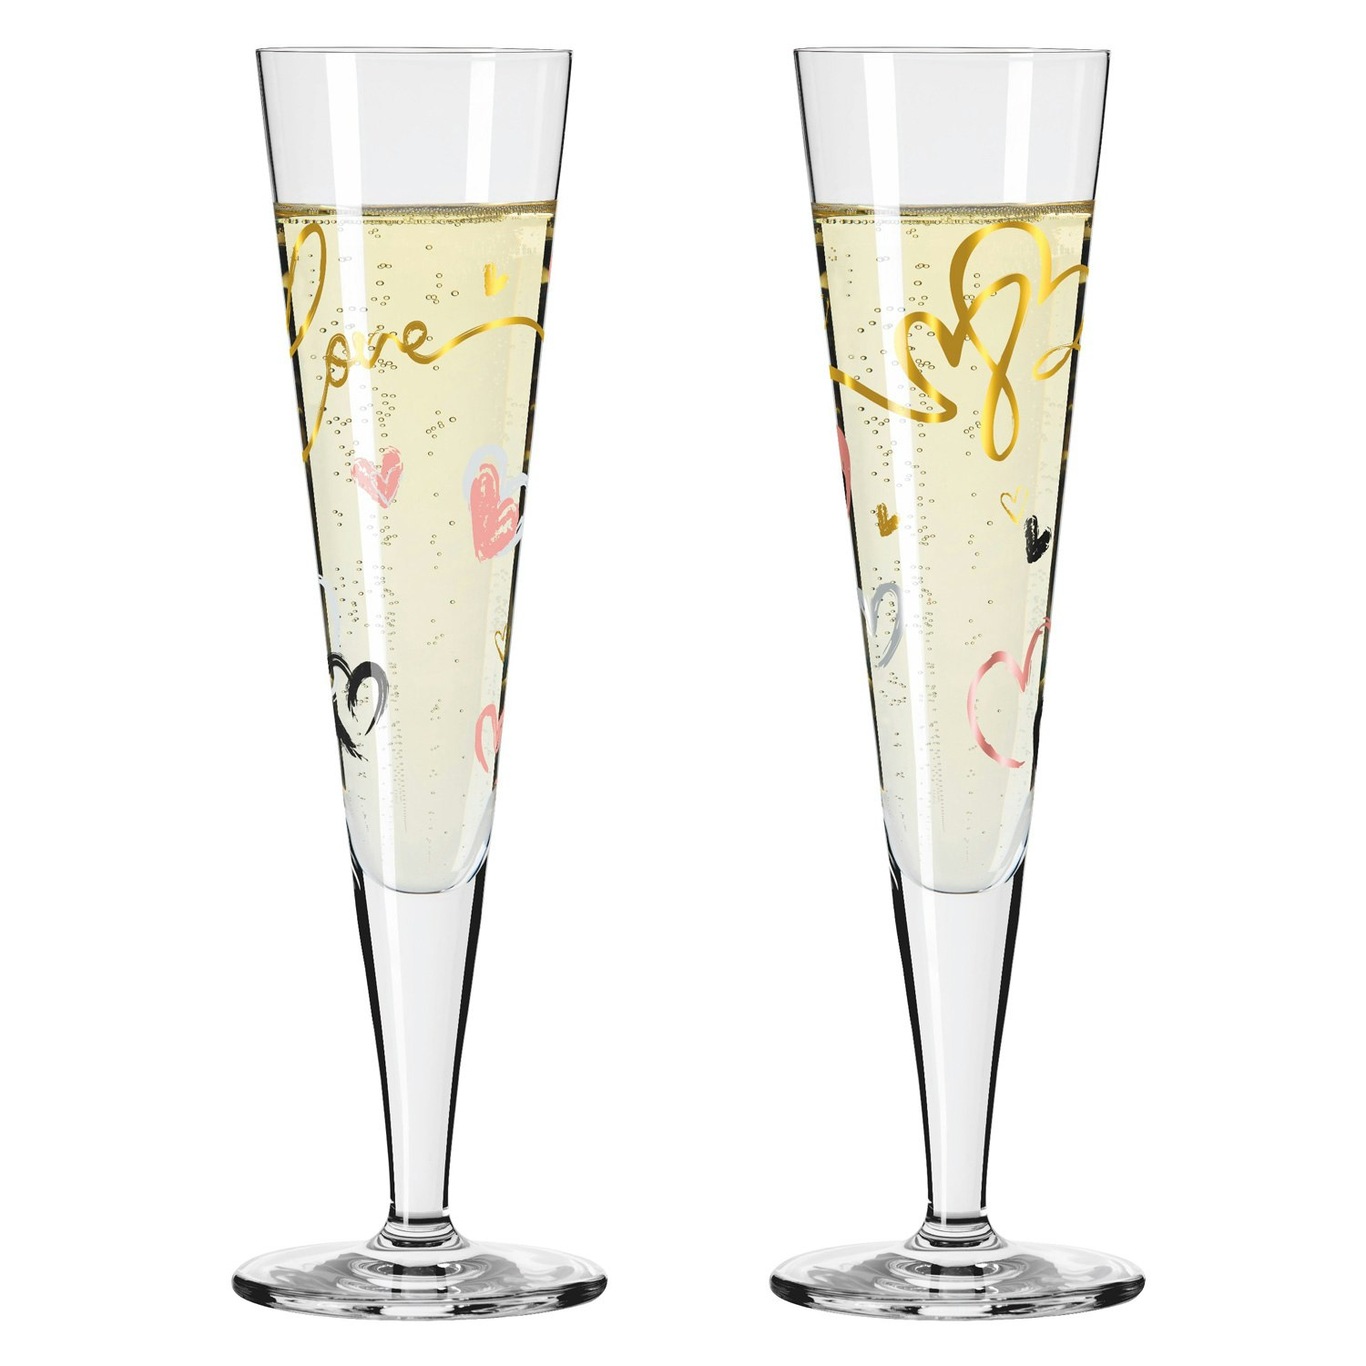 Goldnacht Champagnergläser 2-er Set, 2023